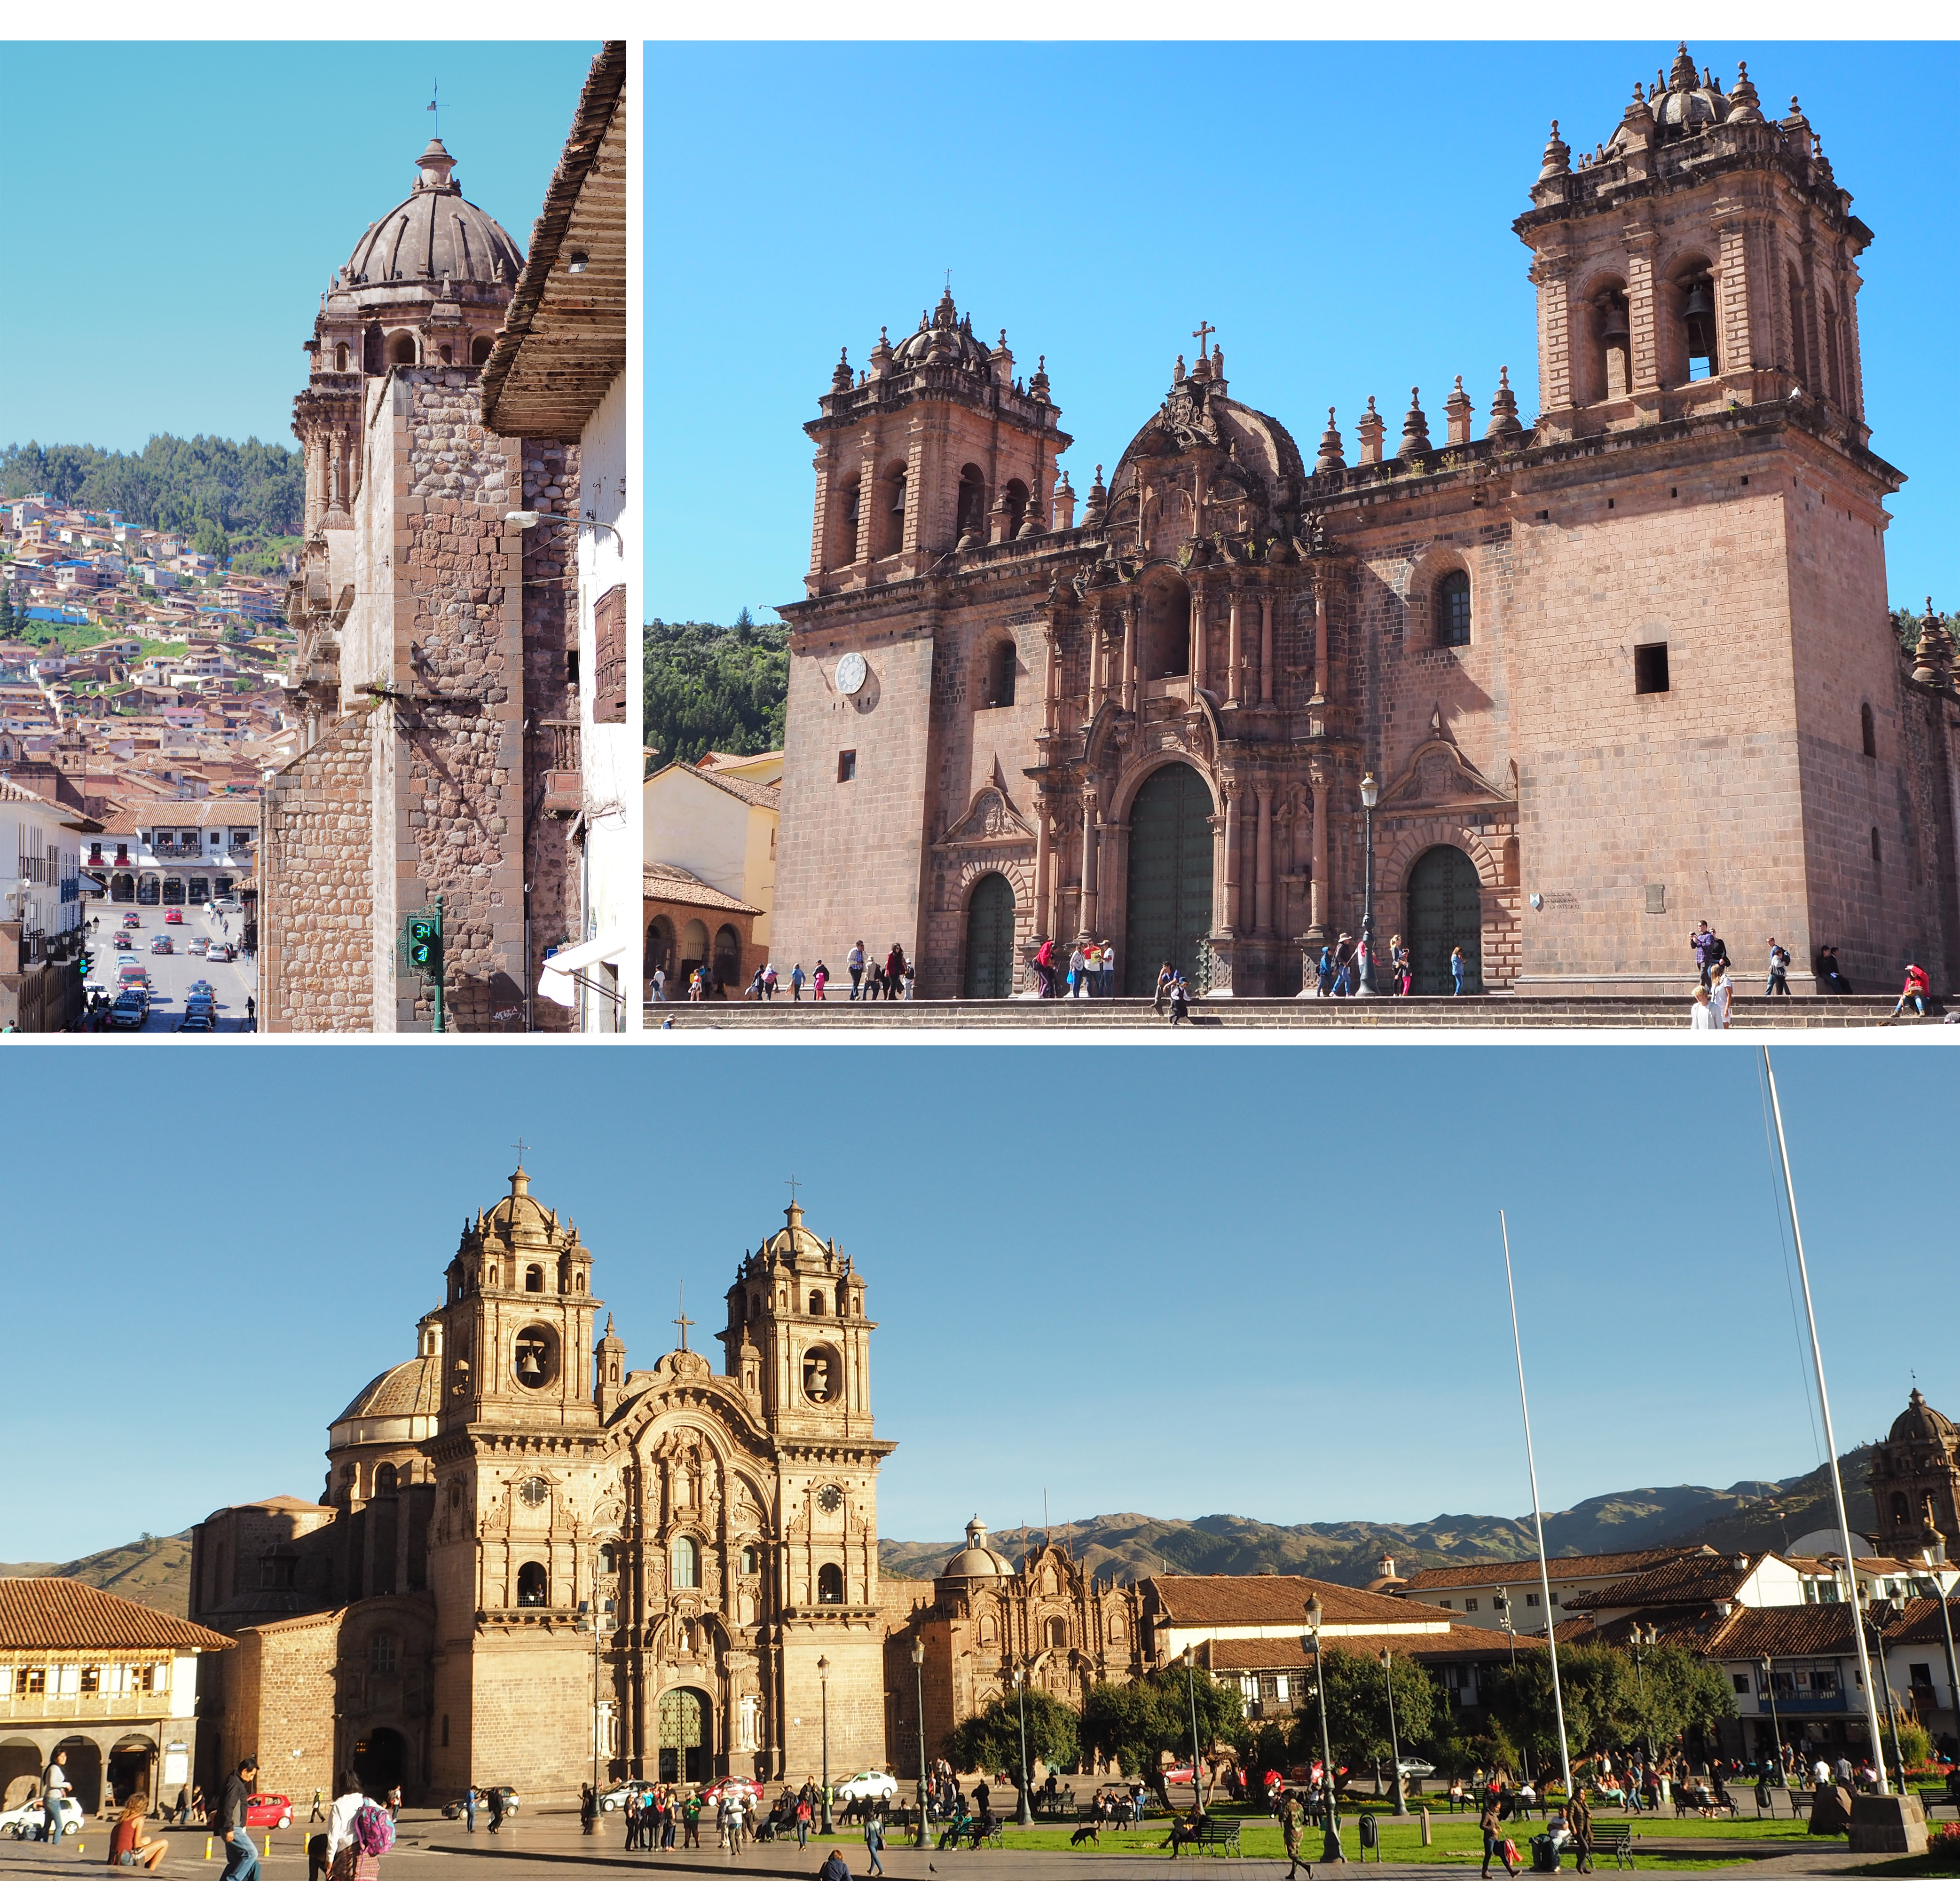 Cusco - plazza armas